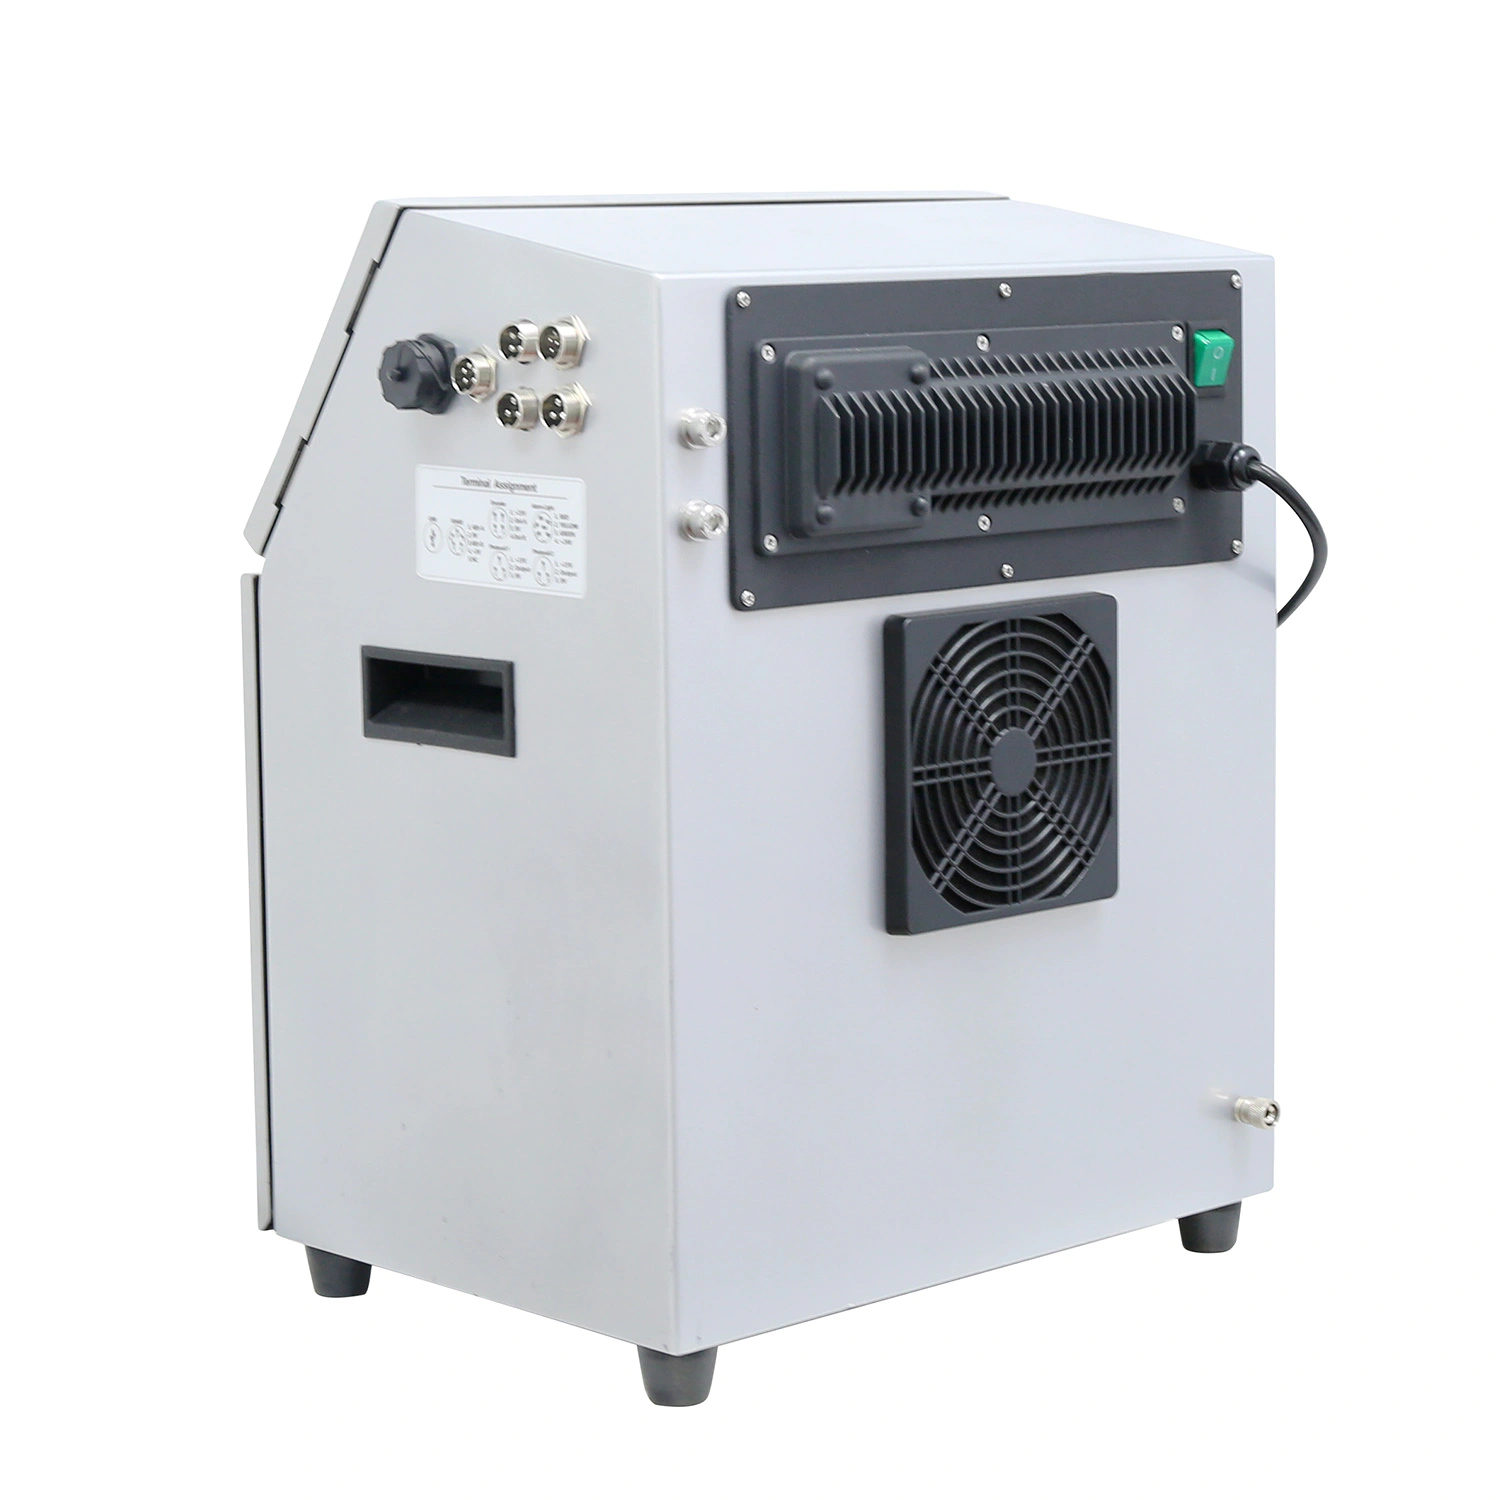 Leadtech Lt800 Thermal Inkjet Printer for Marking Peinting